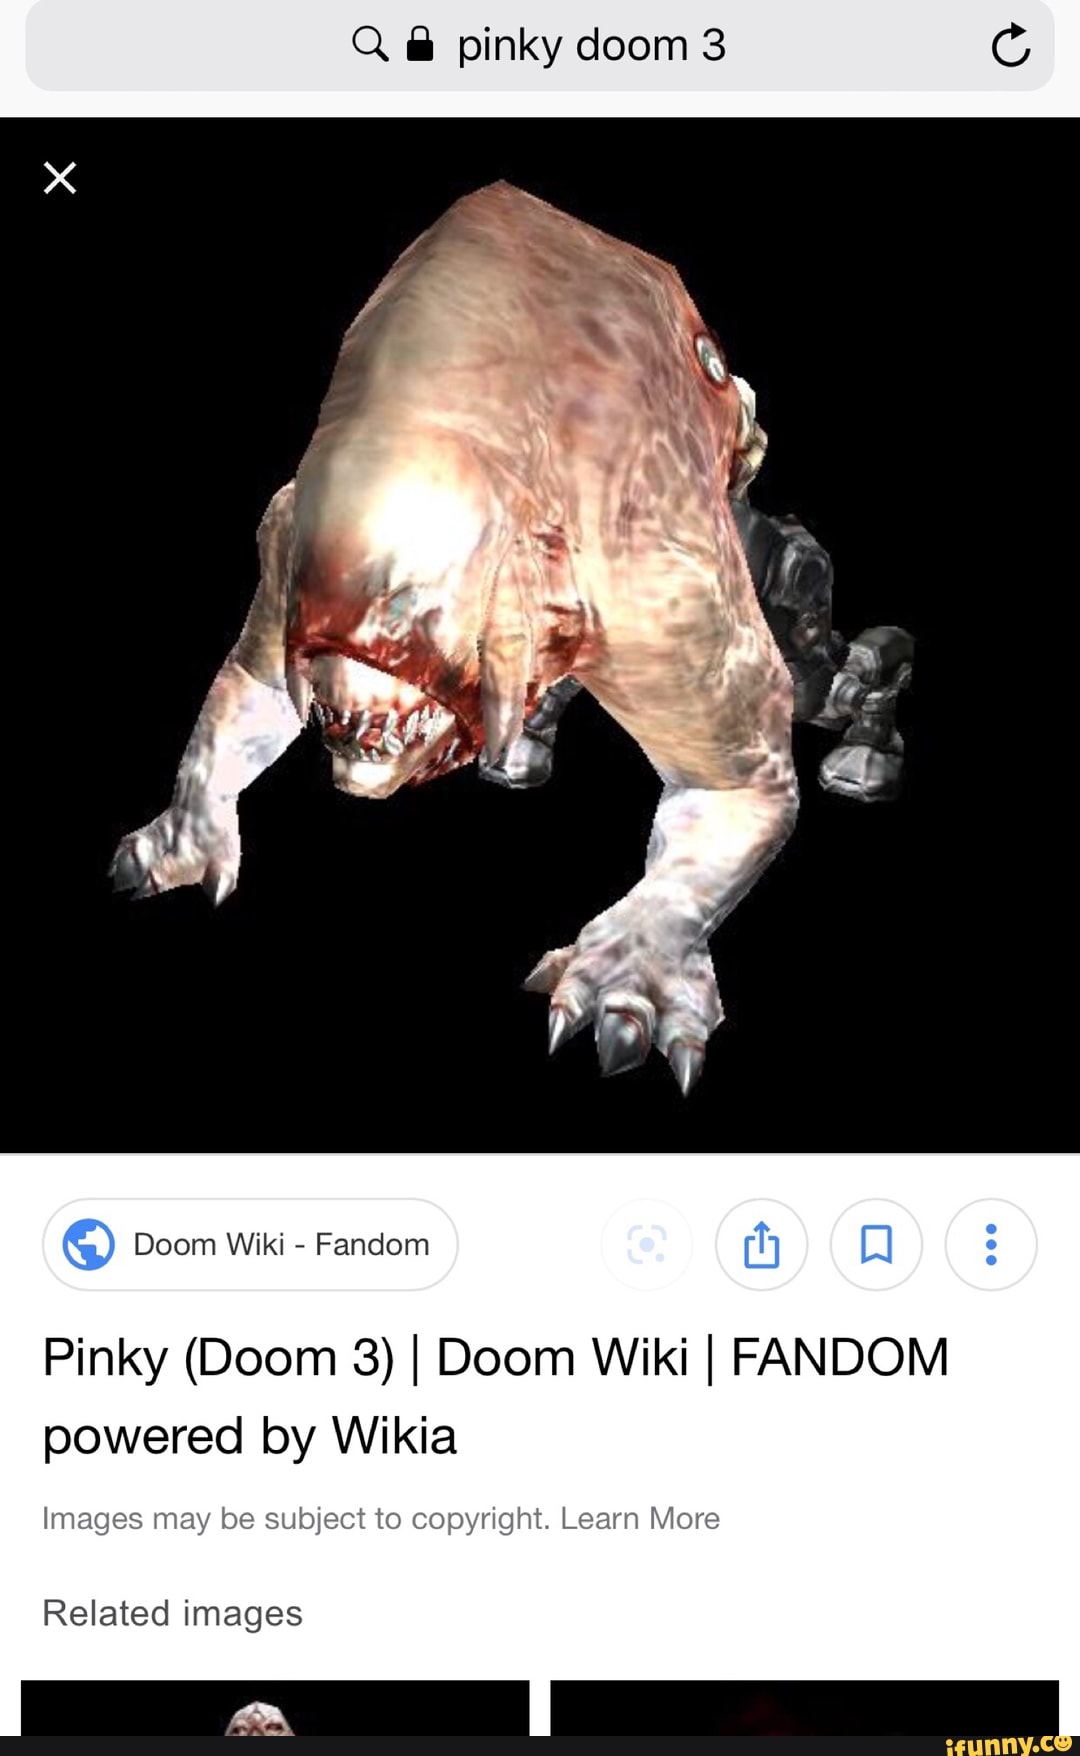 Demon - The Doom Wiki at